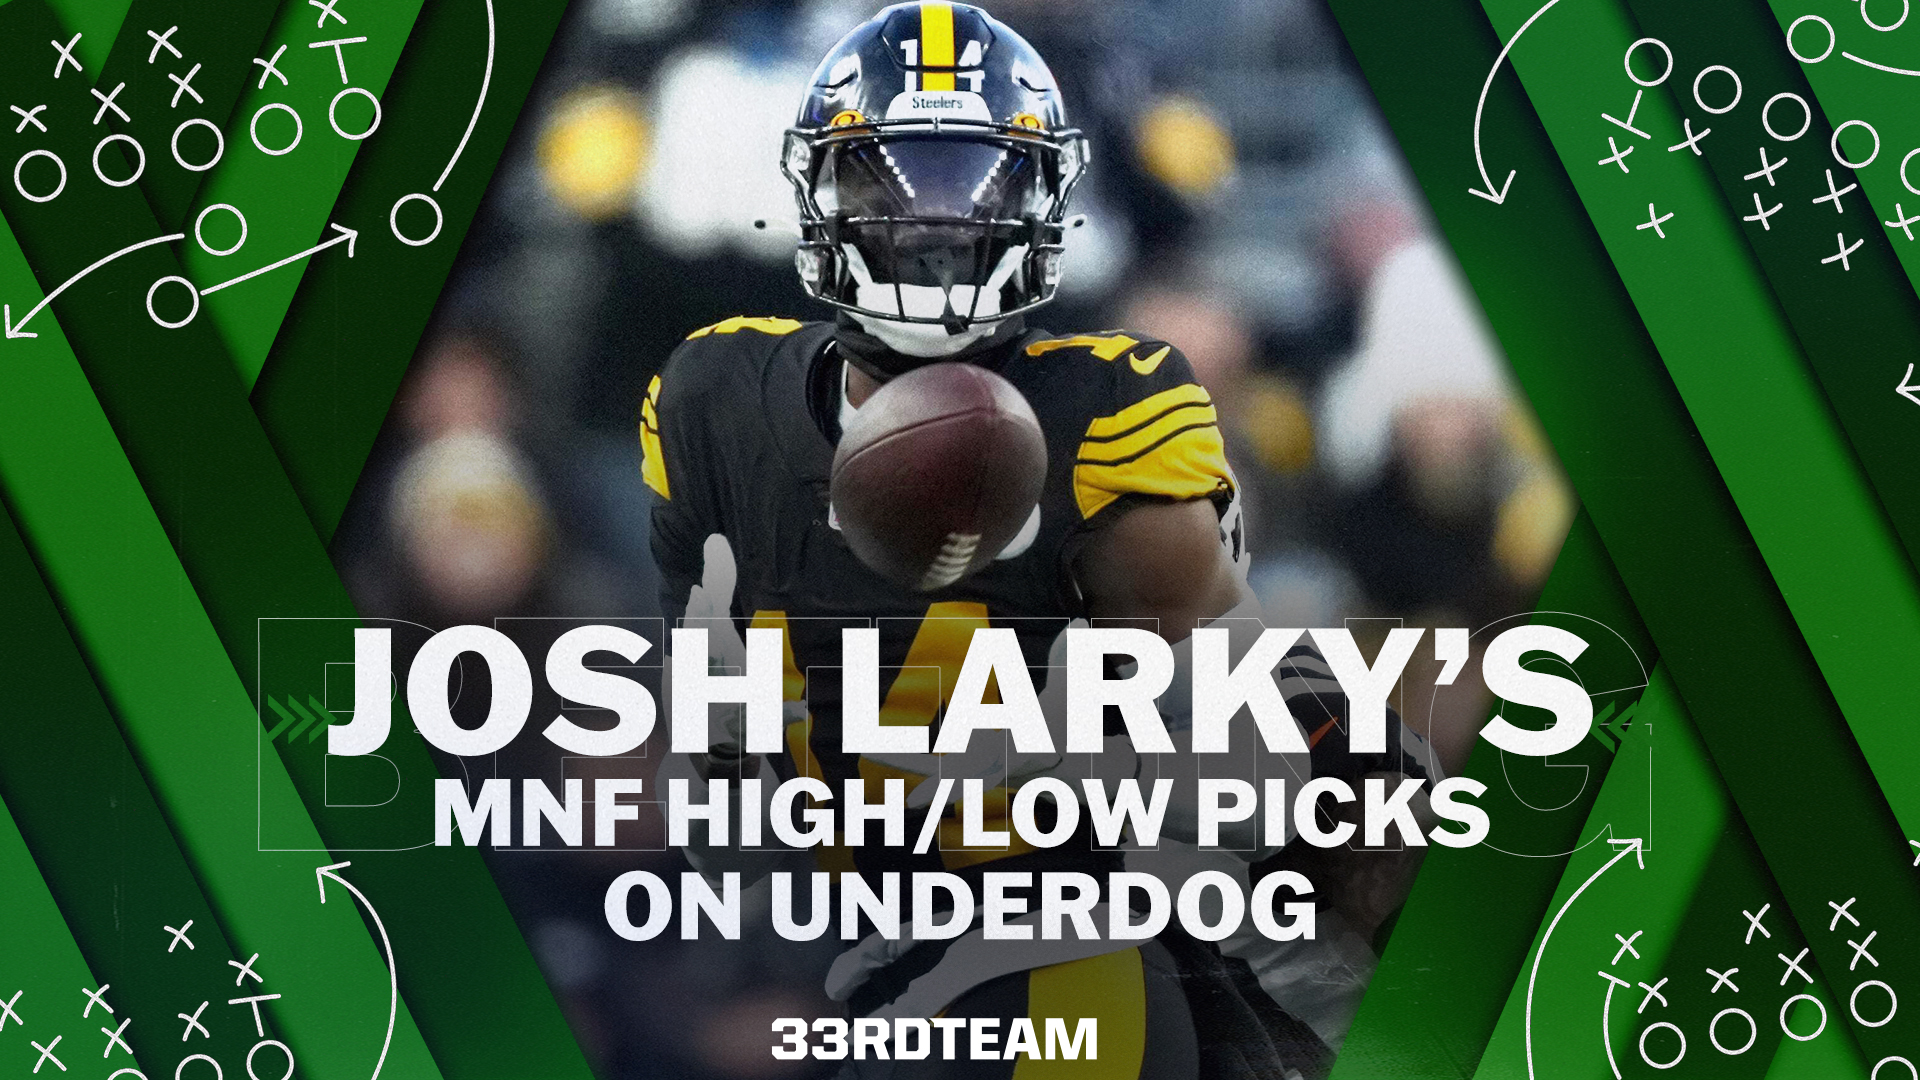 Josh Larky’s Steelers vs. Colts MNF Underdog High/Low Picks